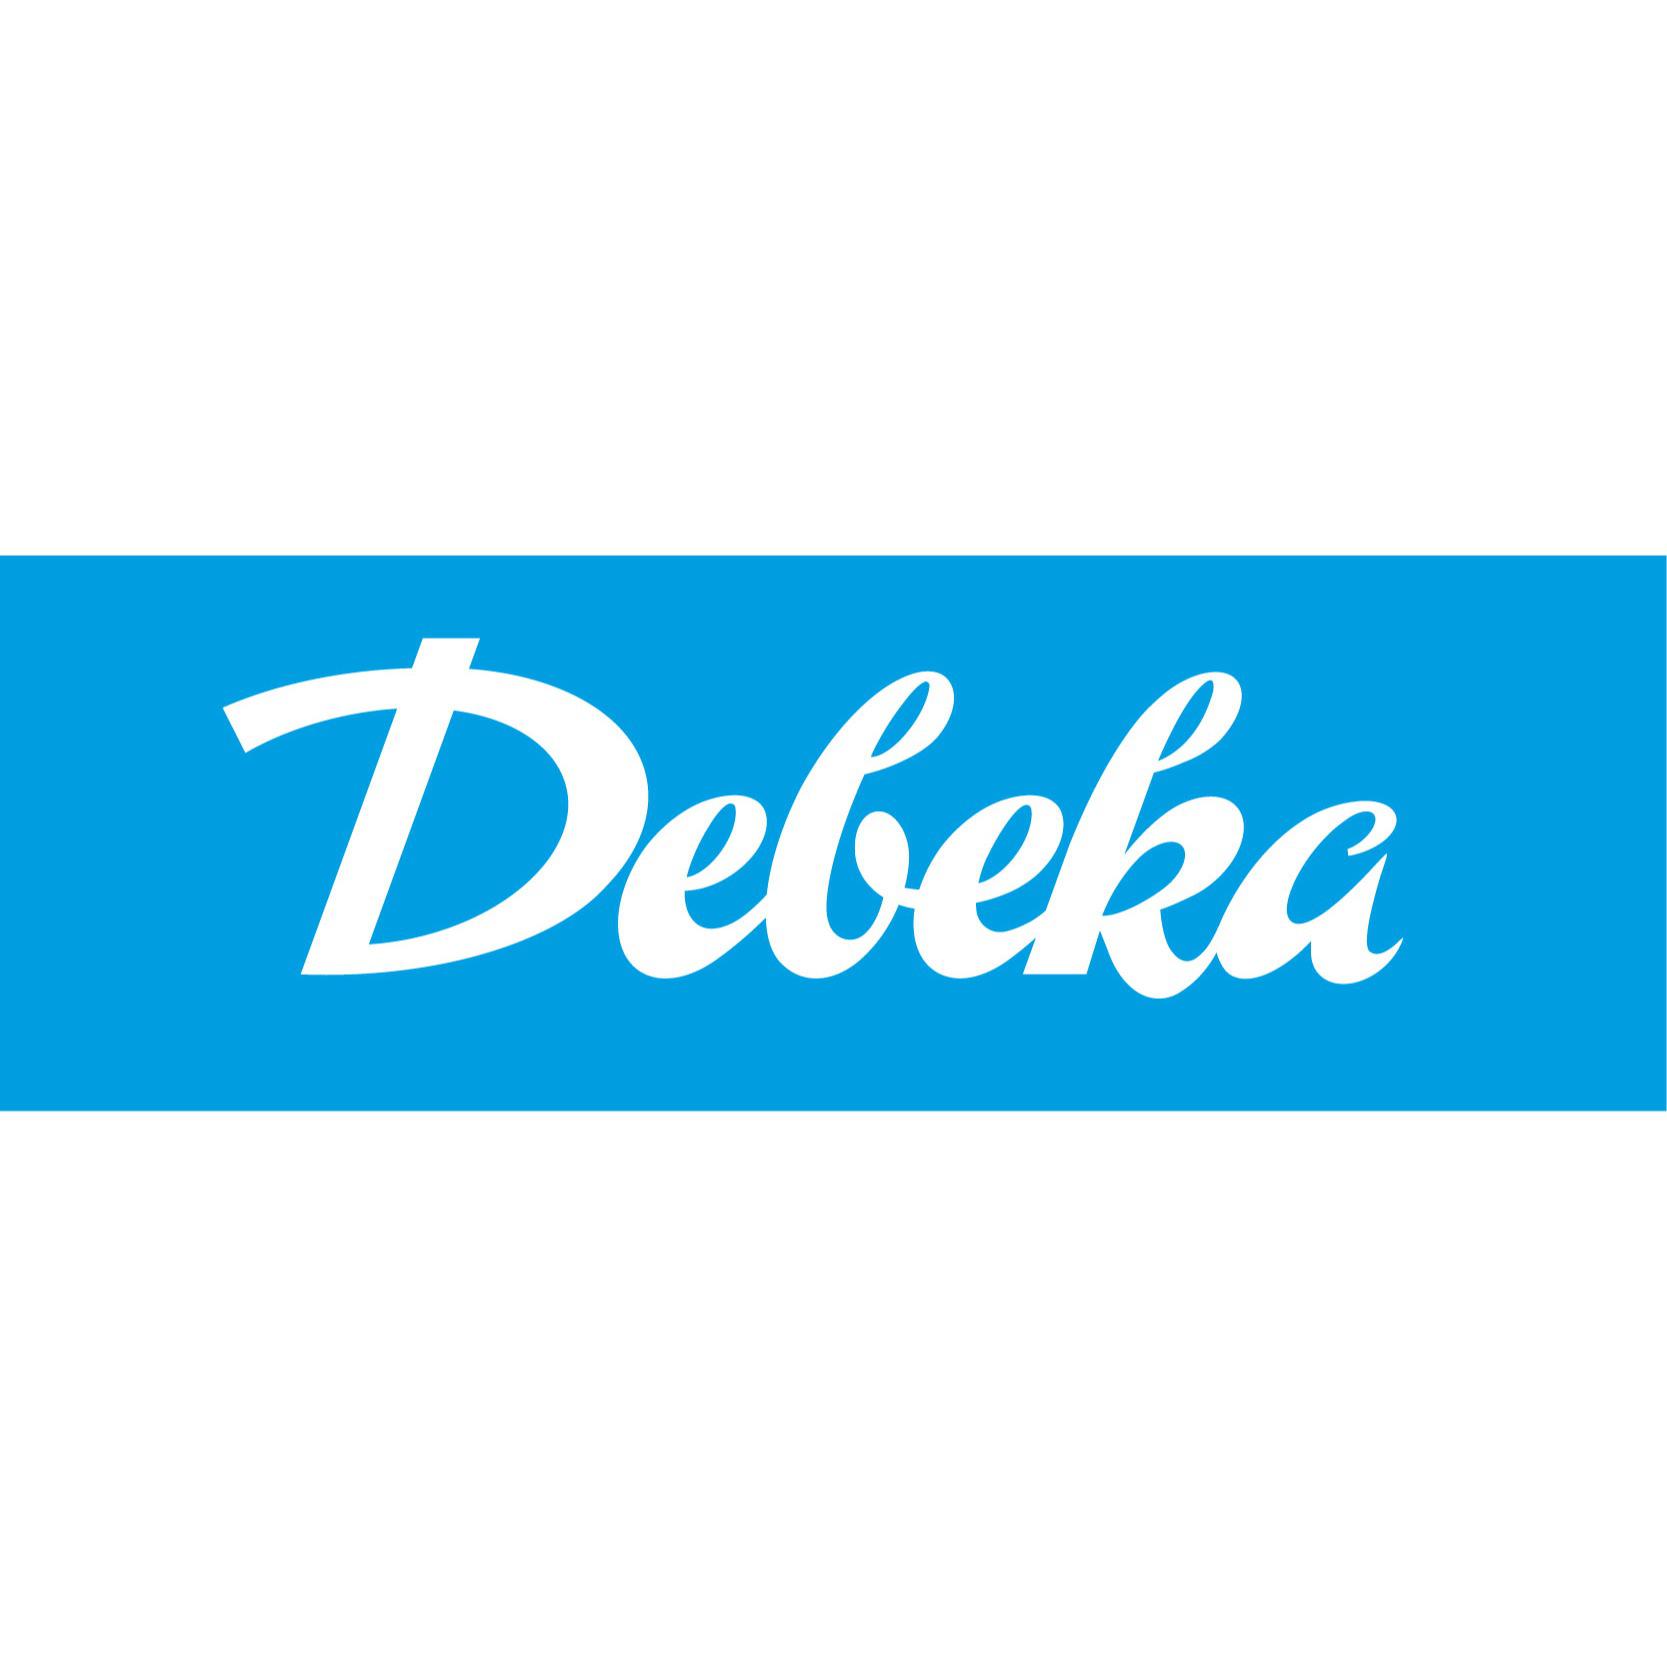 Debeka Servicebüro Zweibrücken in Zweibrücken - Logo